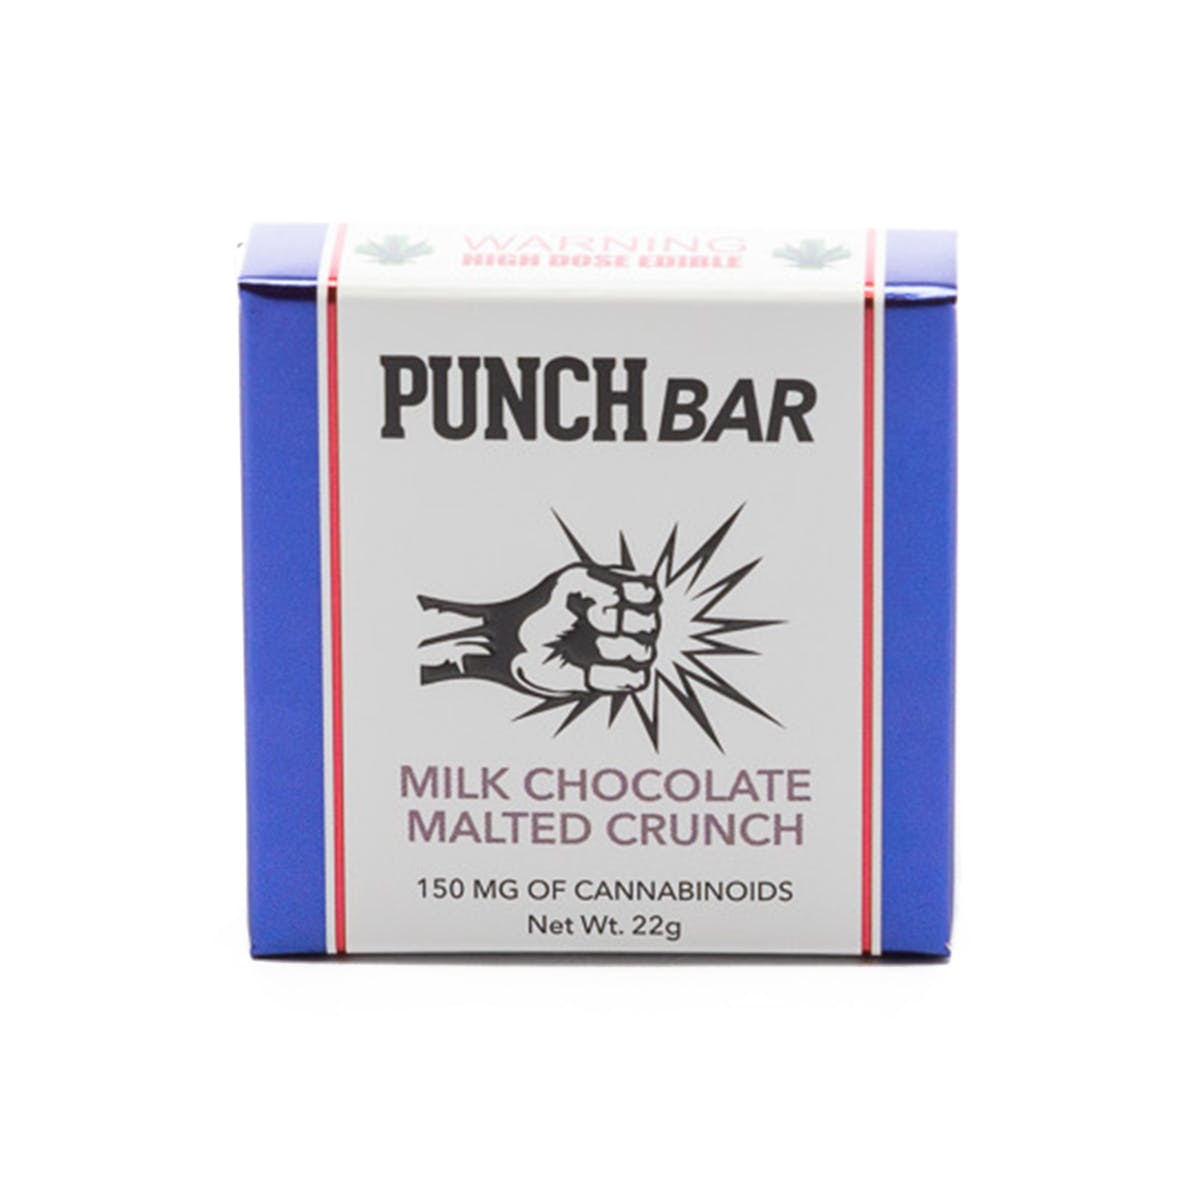 ORIGINAL - Milk Chocolate Malted Crunch 150mg